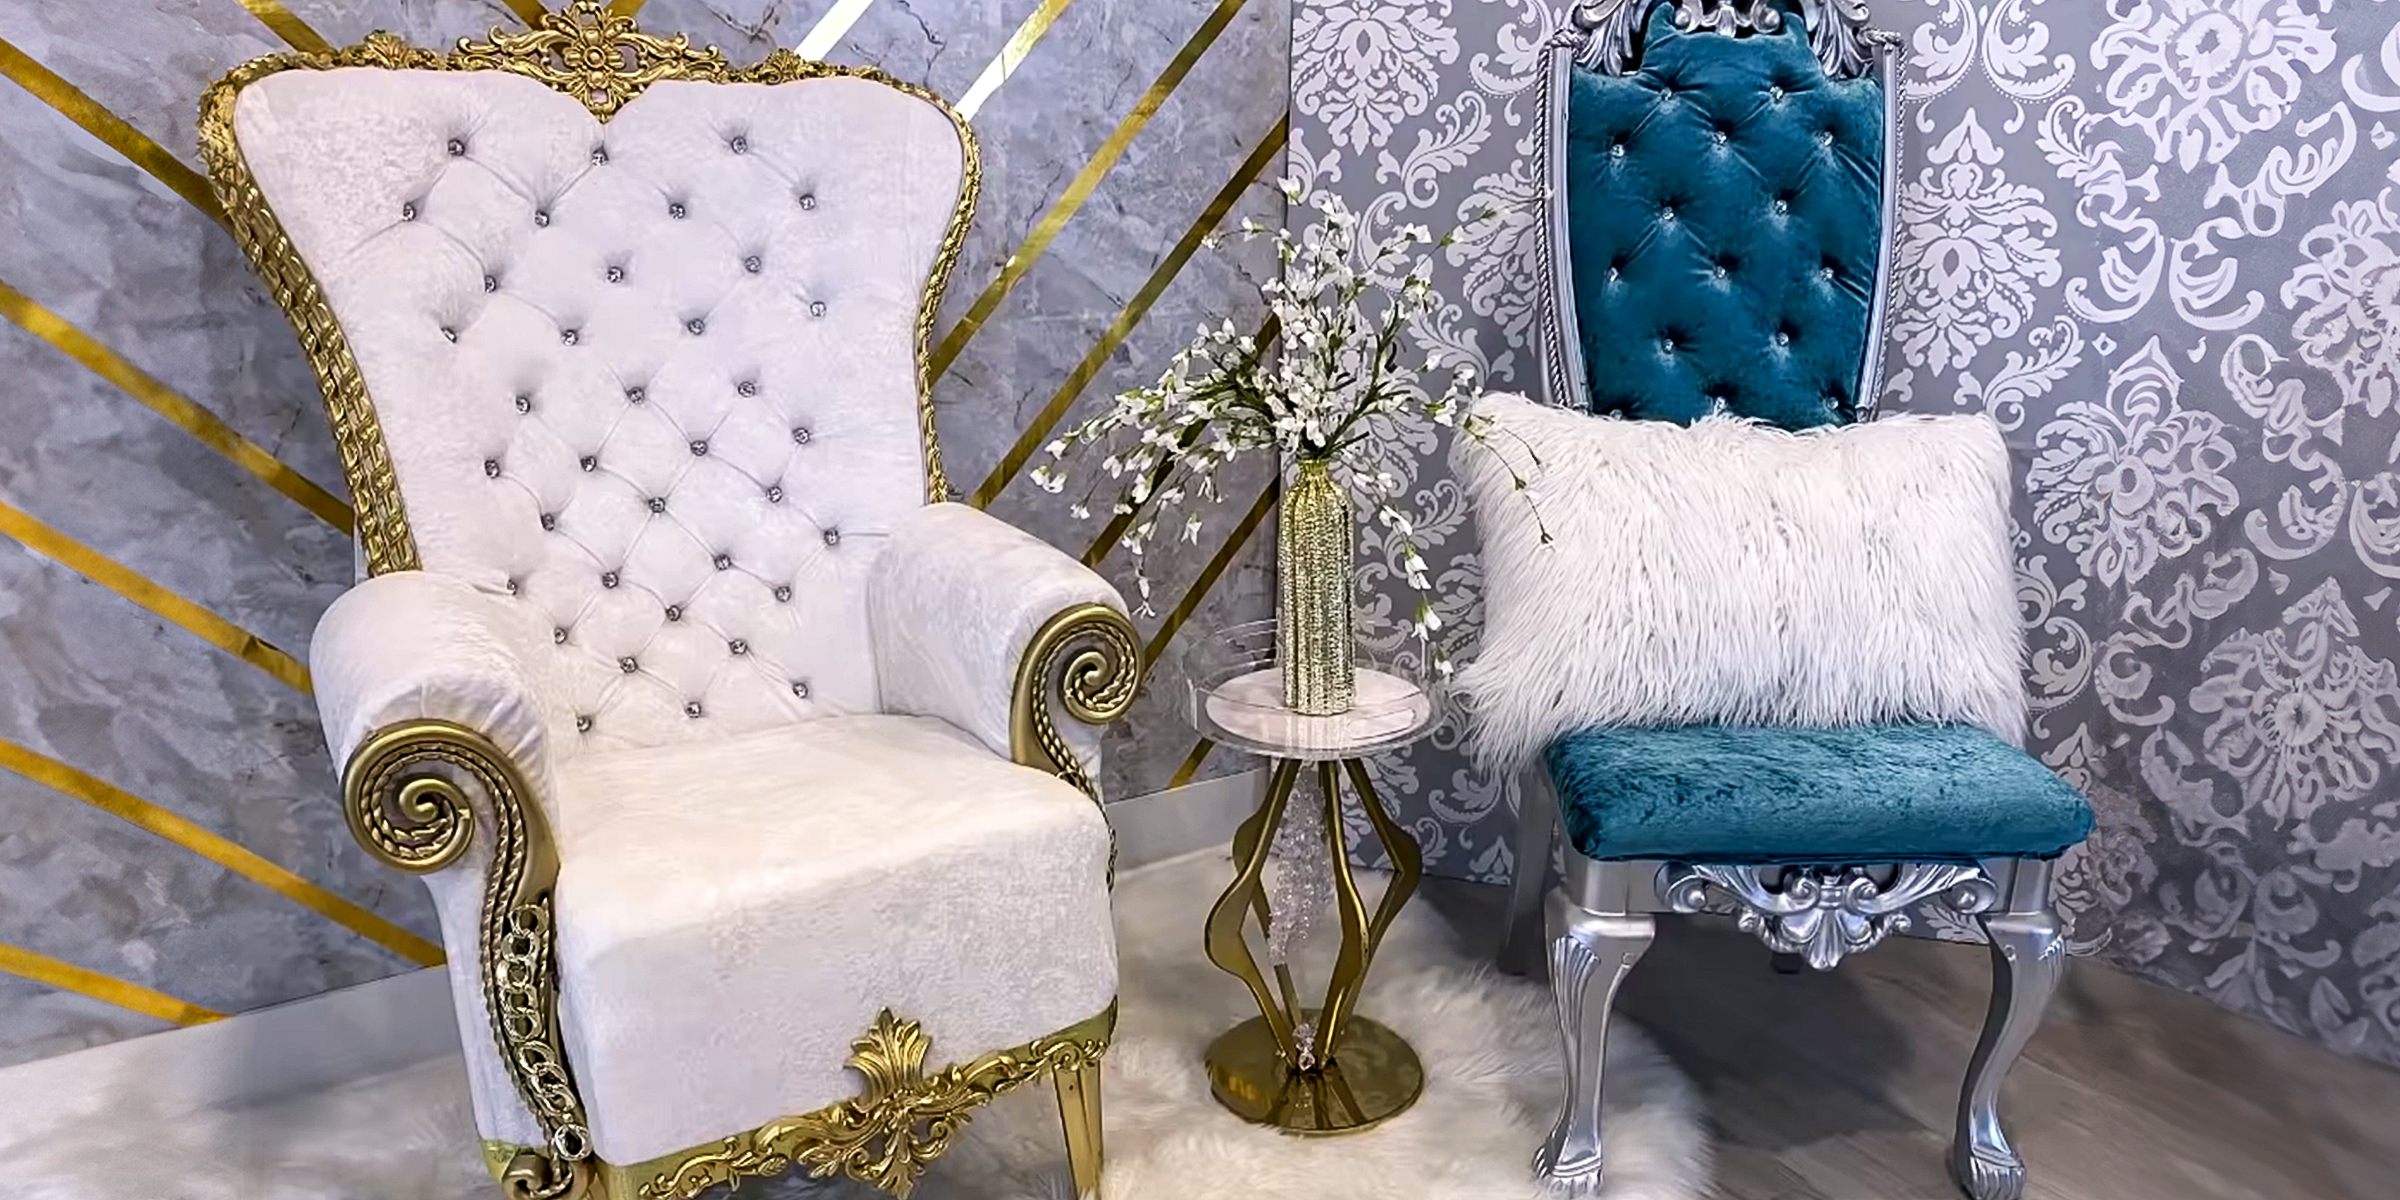 A DIY white throne chair | Source: YouTube/yoduvhessentials6310